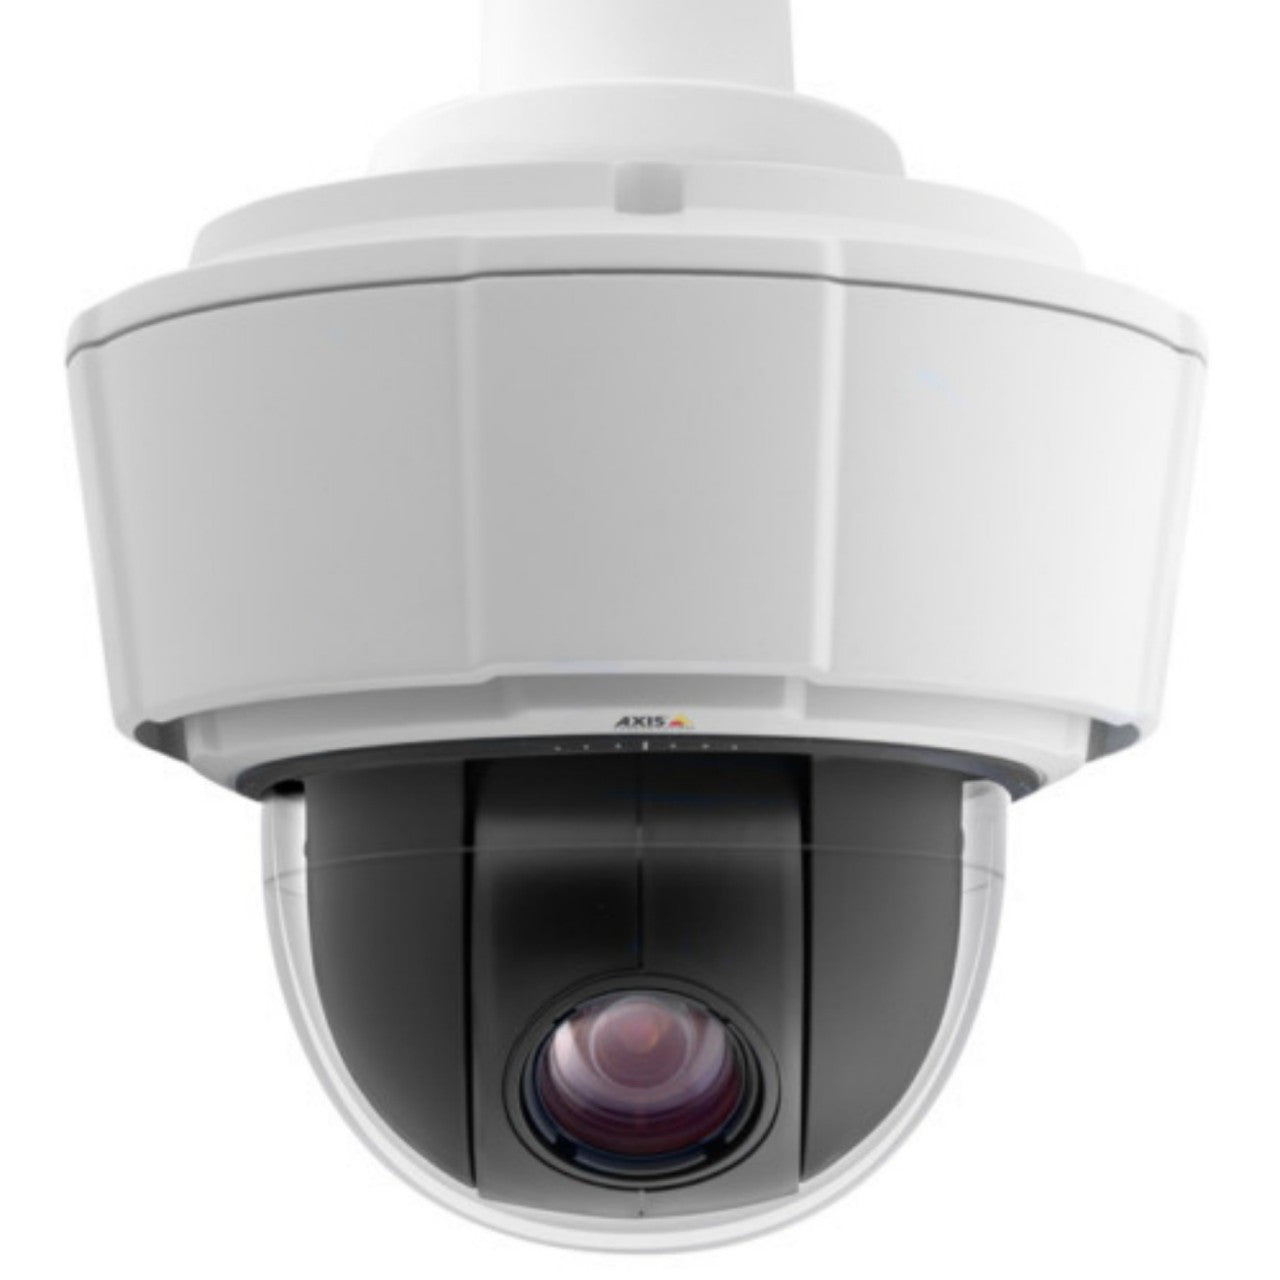 AXIS P5512-E (0411-001) PTZ Dome Network Camera